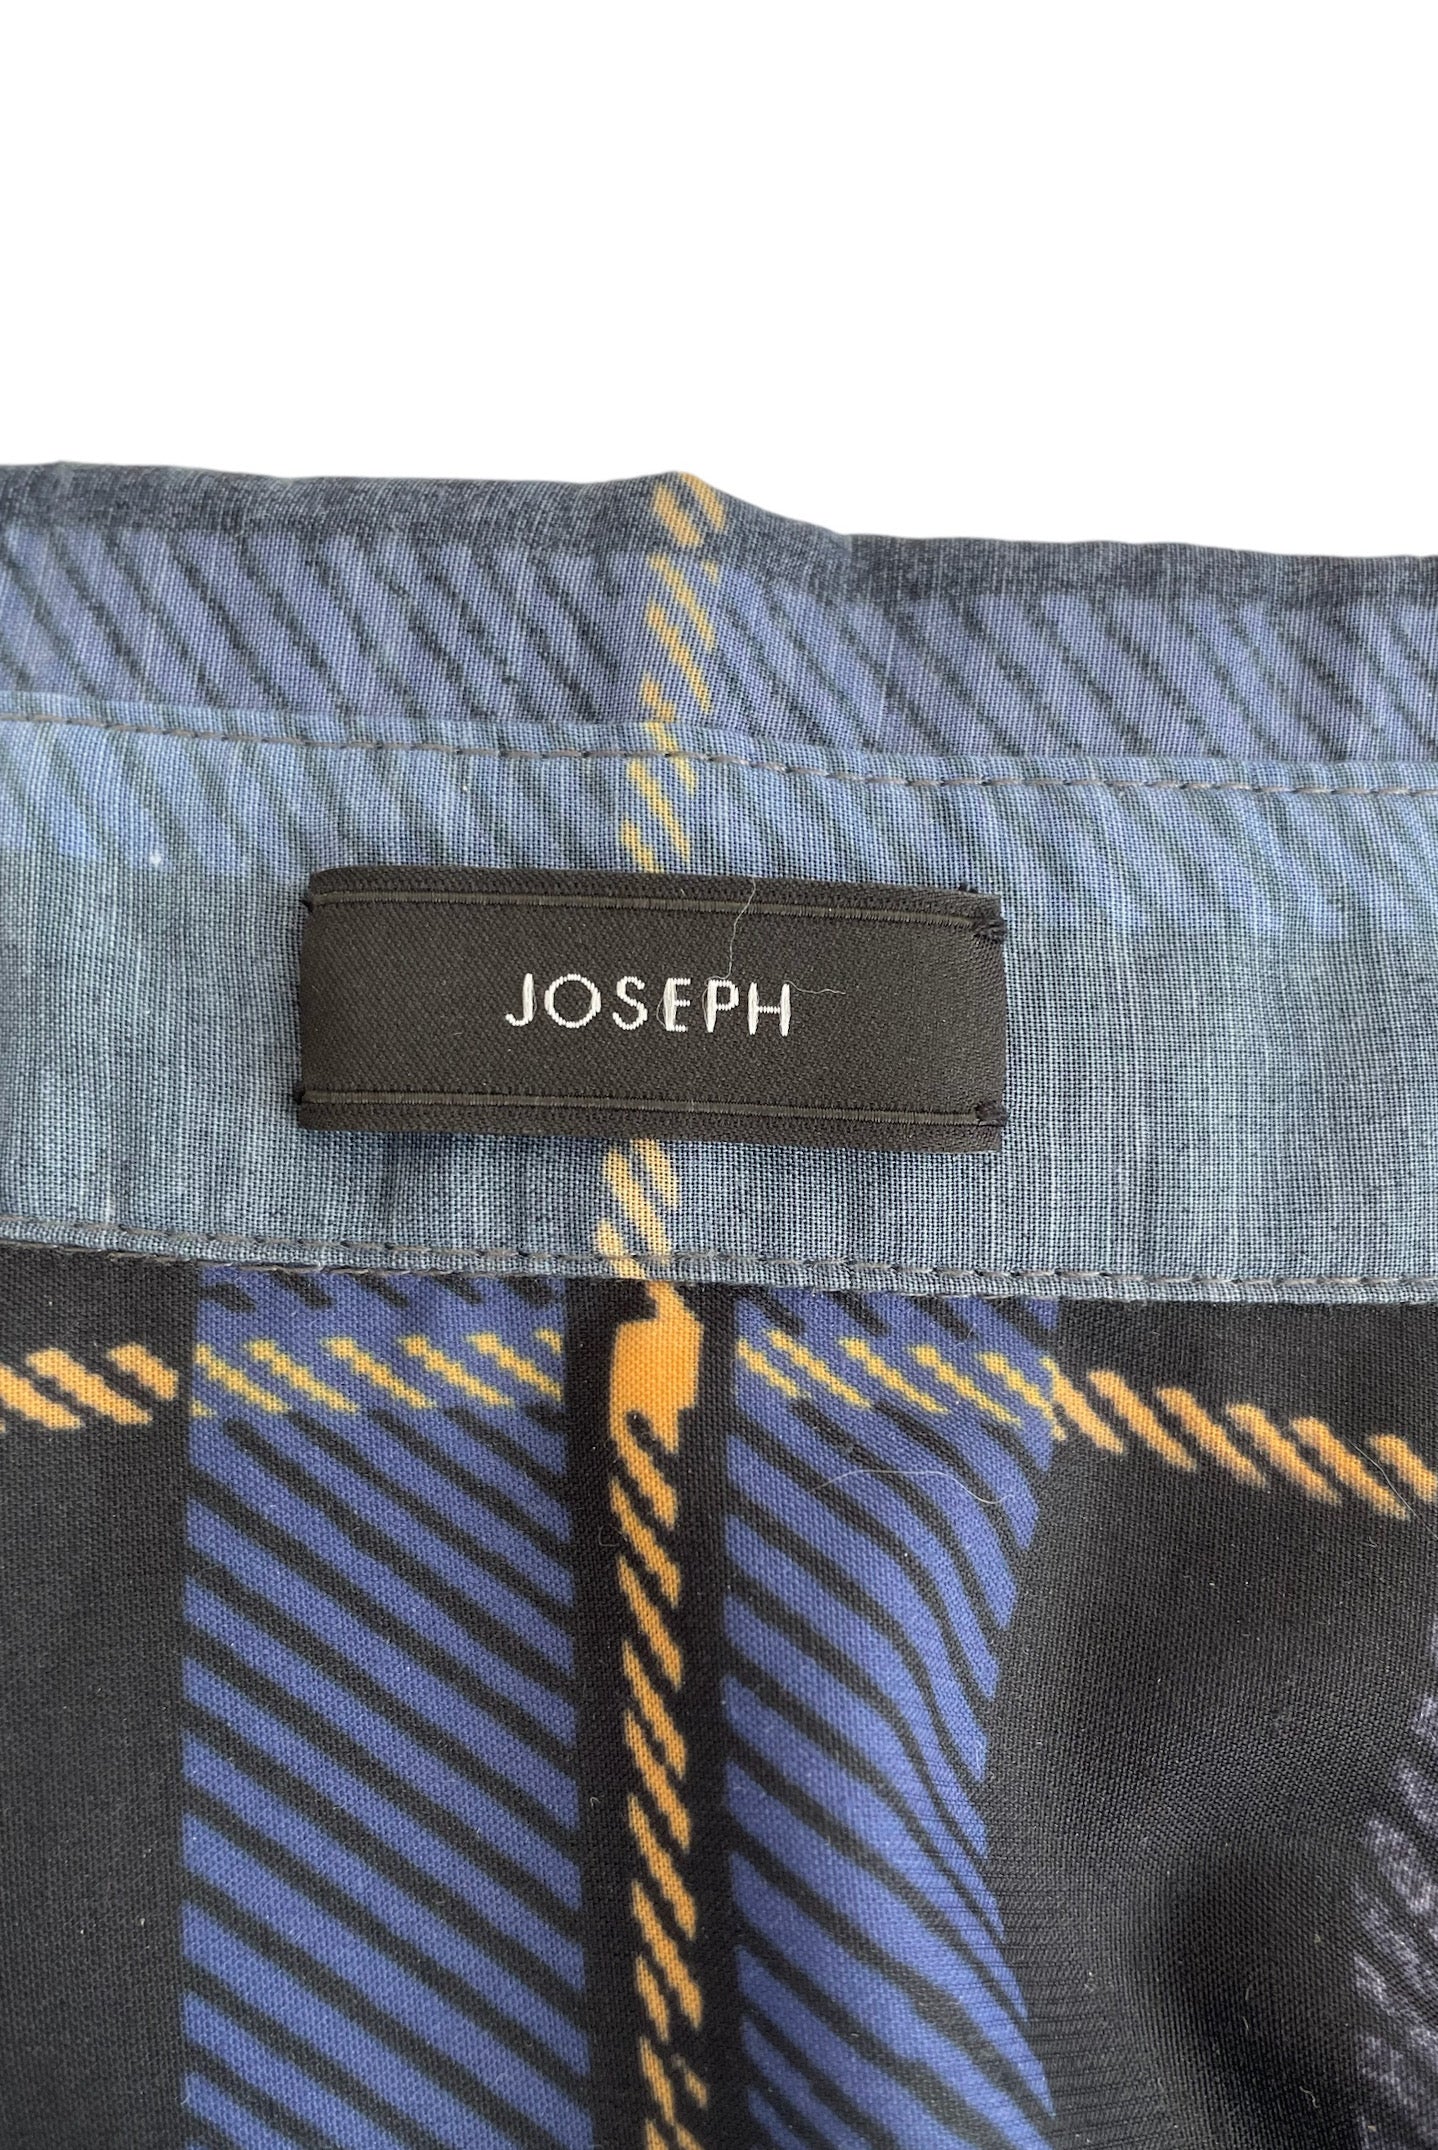 Joseph Check Shirt